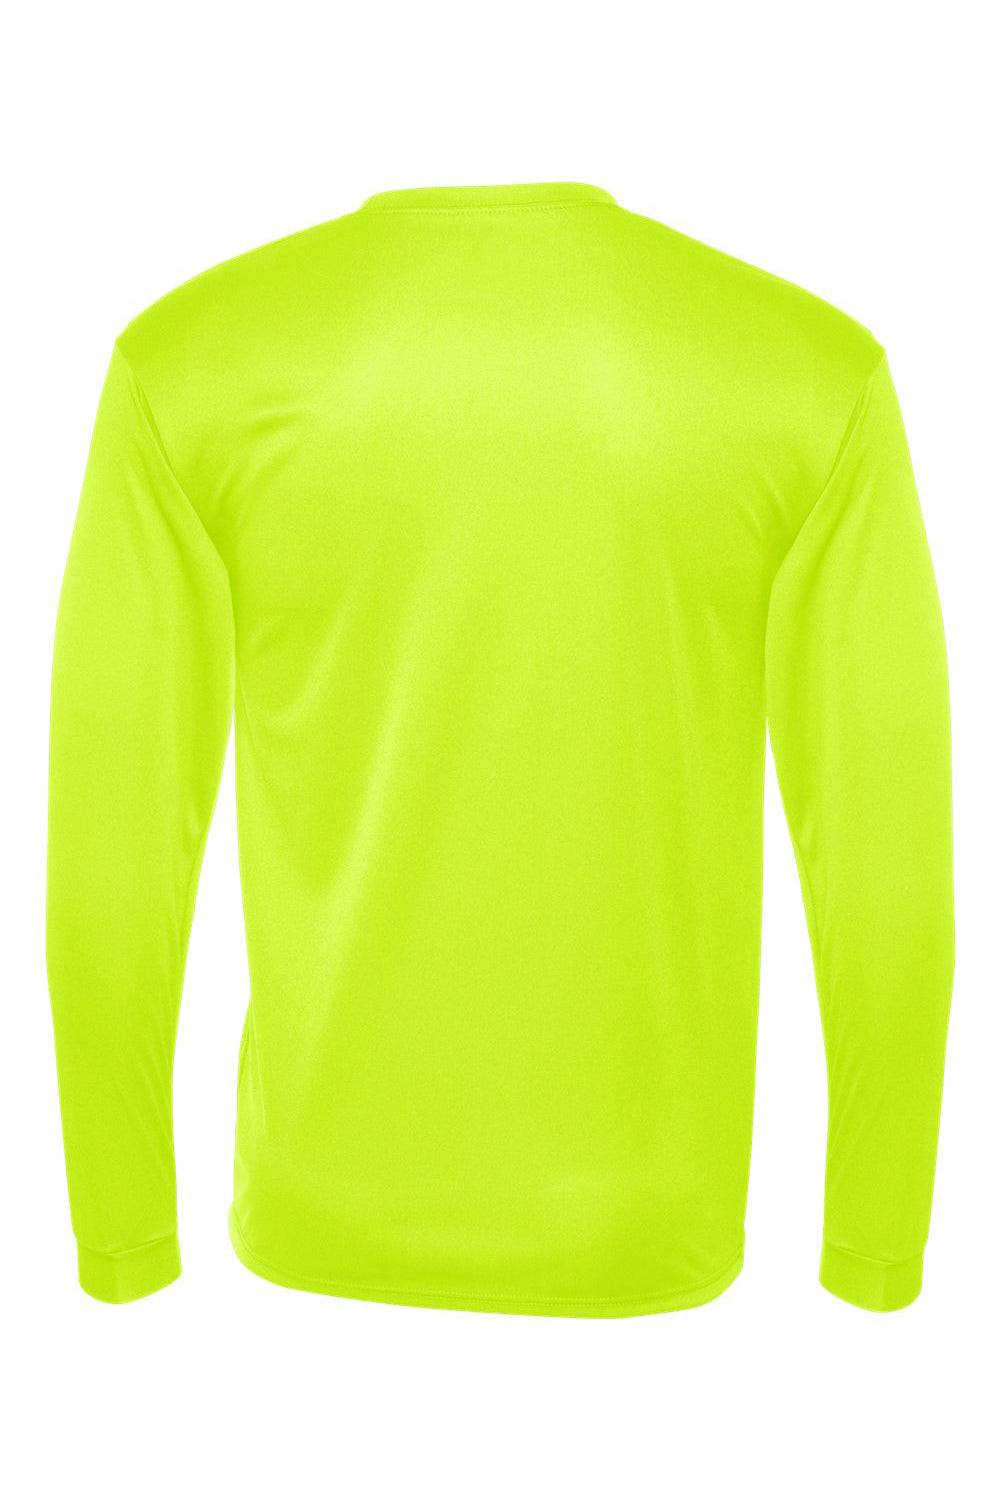 C2 Sport 5104 Mens Performance Moisture Wicking Long Sleeve Crewneck T-Shirt Safety Yellow Flat Back